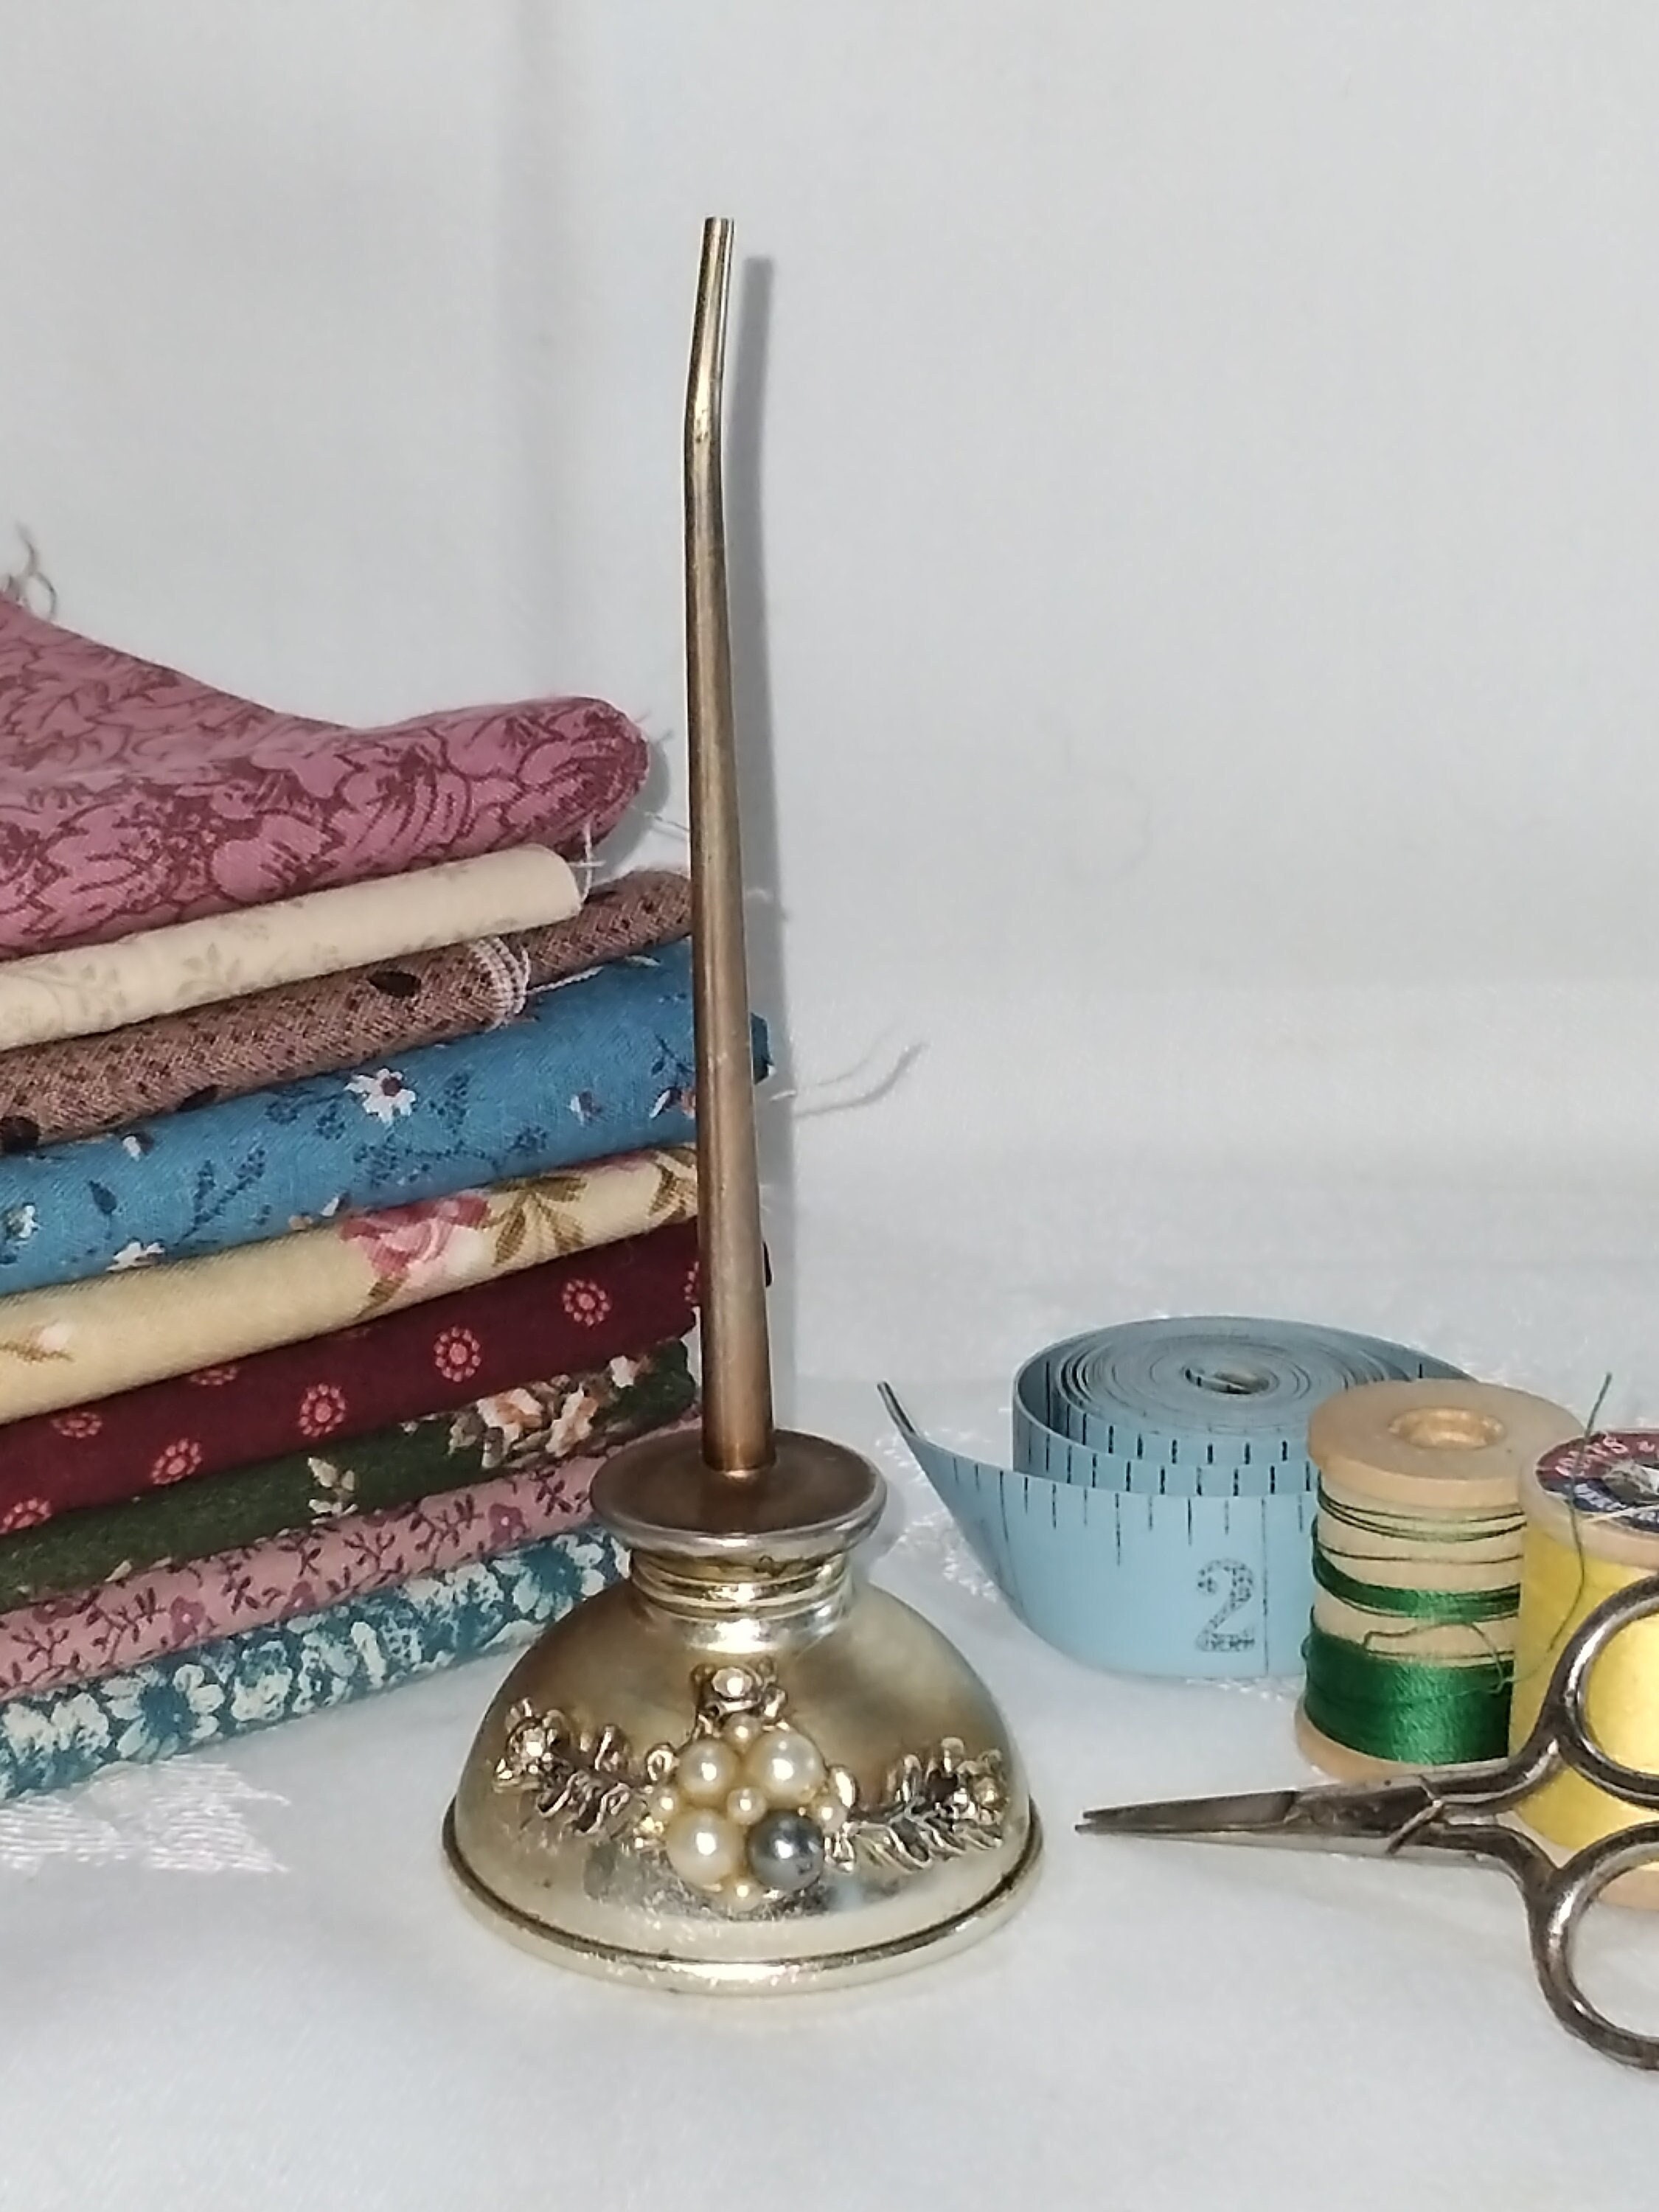 Vintage Singer Sewing Machine 3 Oz Handy Oiler Oil Tin Can Lead Spout -  Ruby Lane